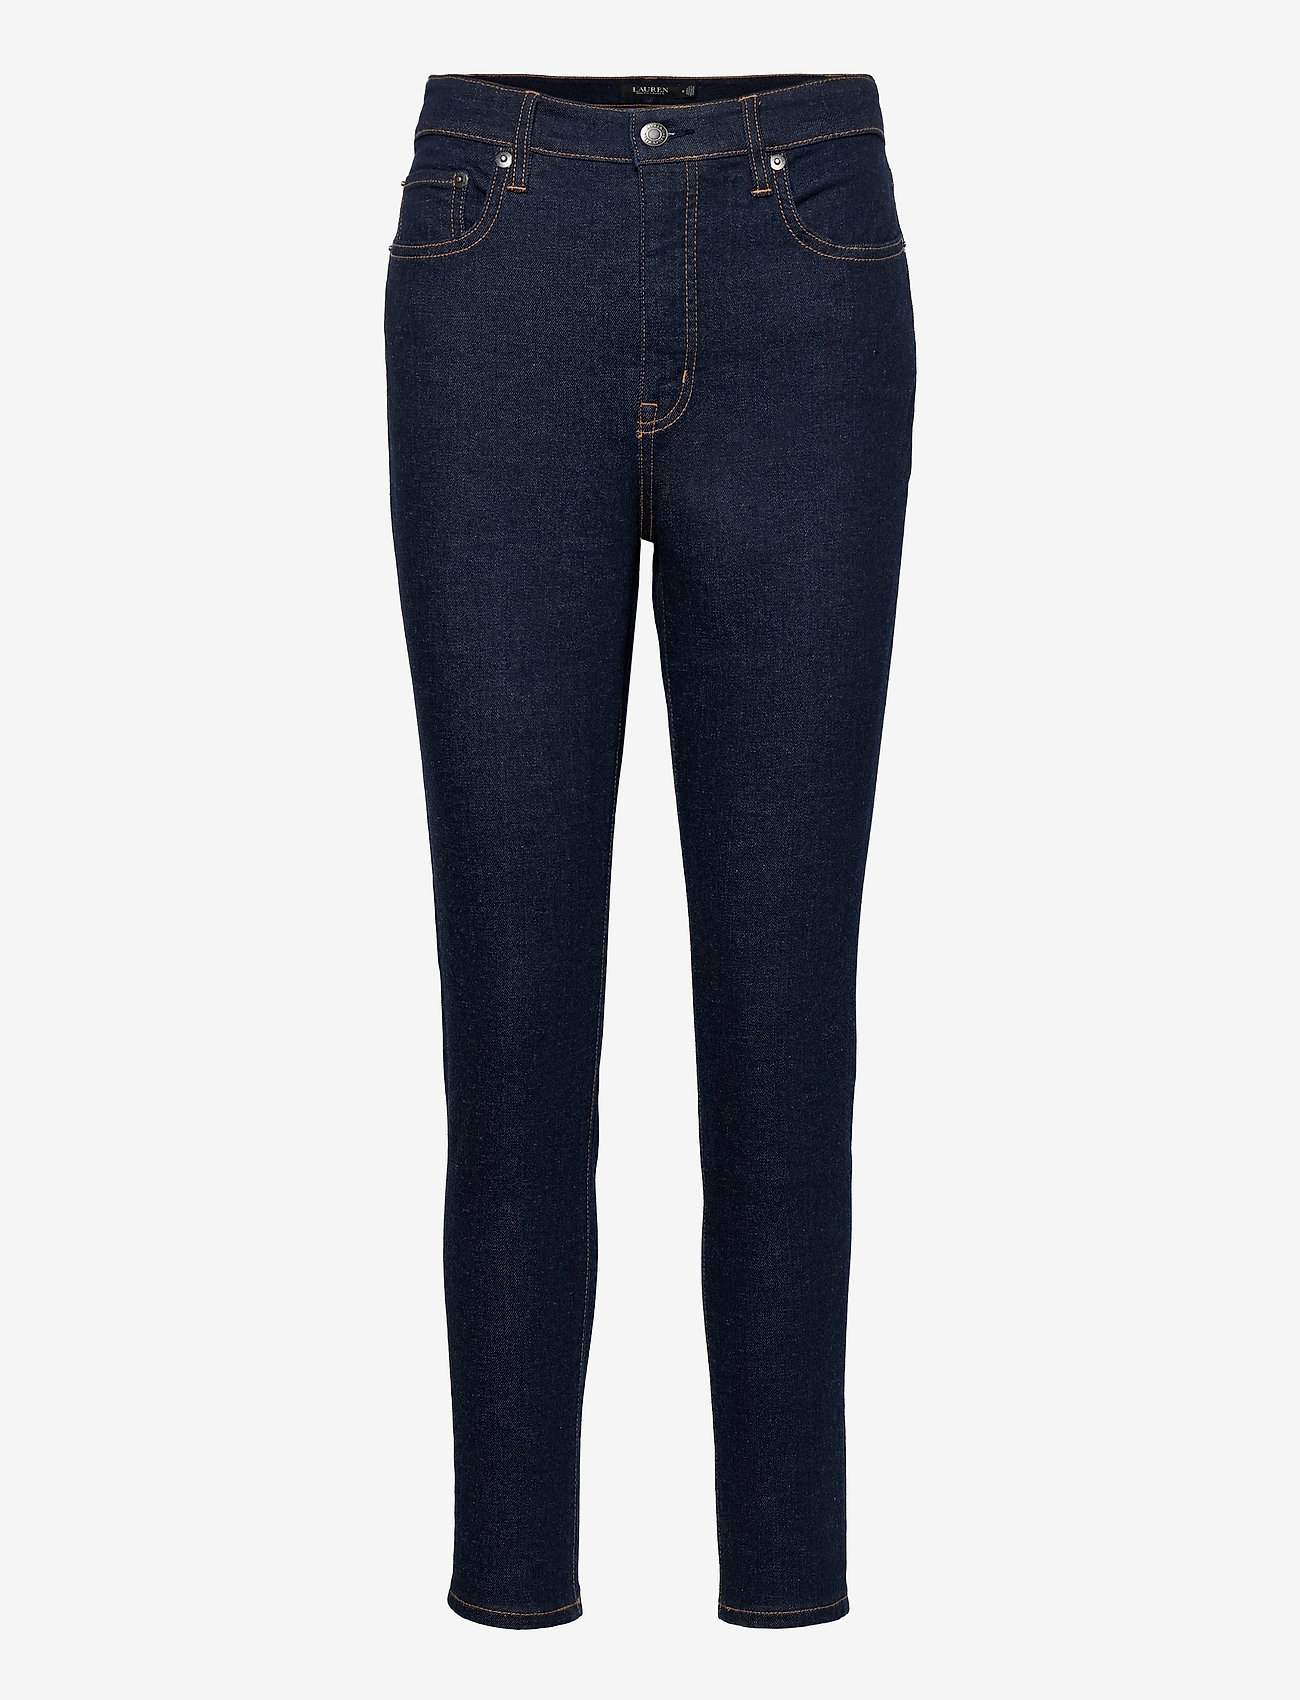 Lauren Ralph Lauren - High-Rise Skinny Ankle Jean - skinny jeans - rinse wash - 1